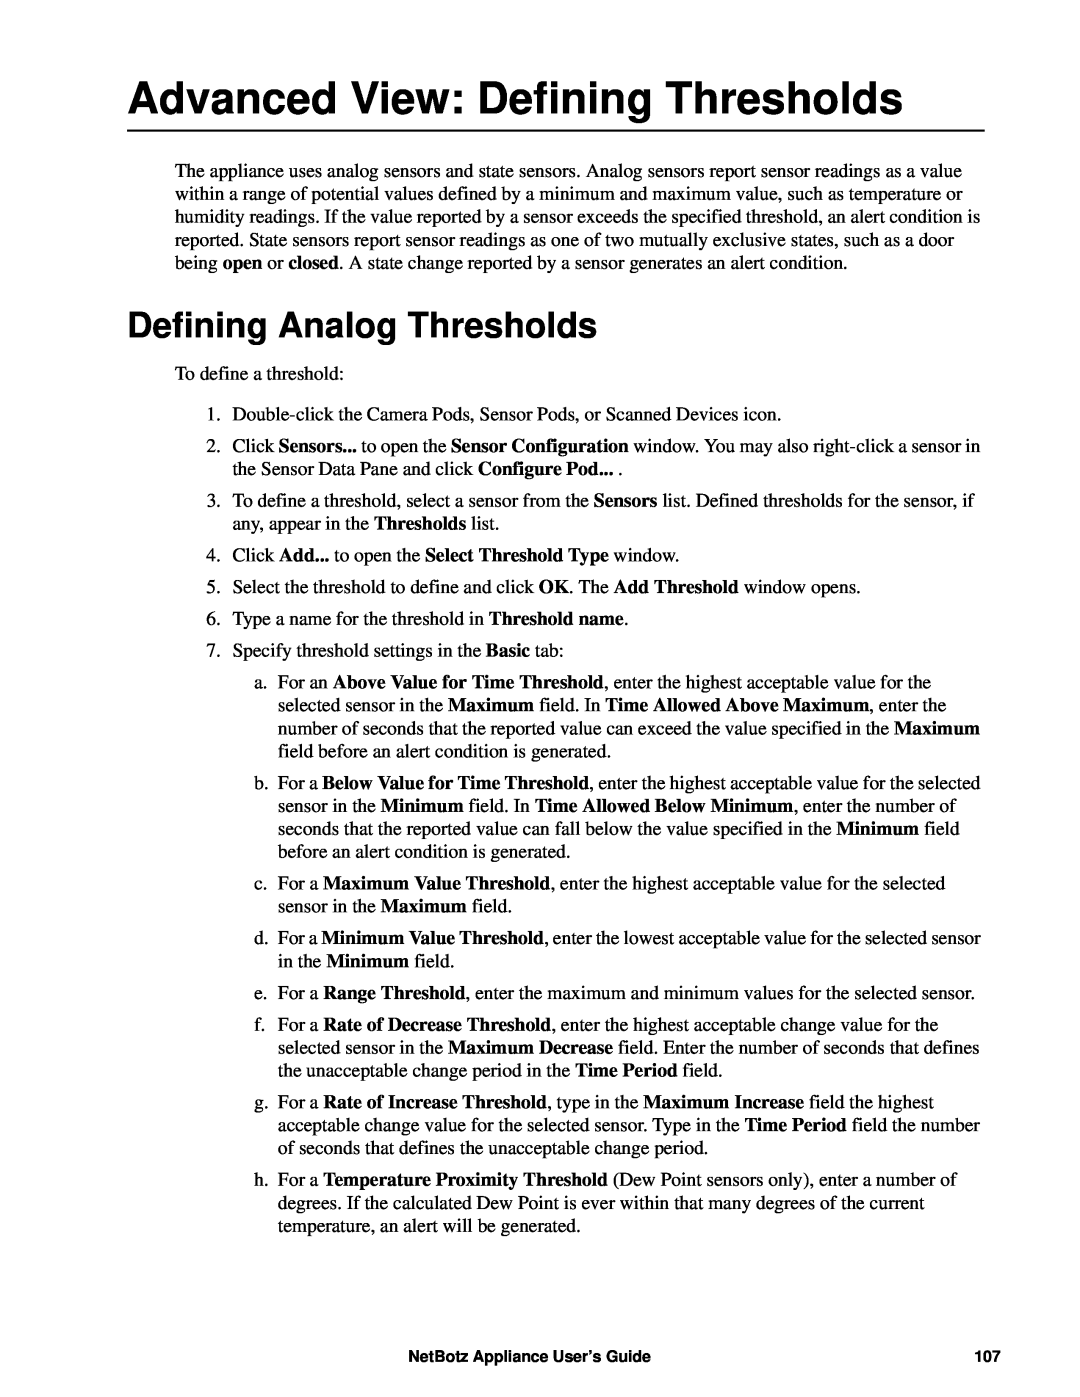 APC NBRK0550, NBRK0450, NBRK0570 manual Advanced View: Defining Thresholds, Defining Analog Thresholds 